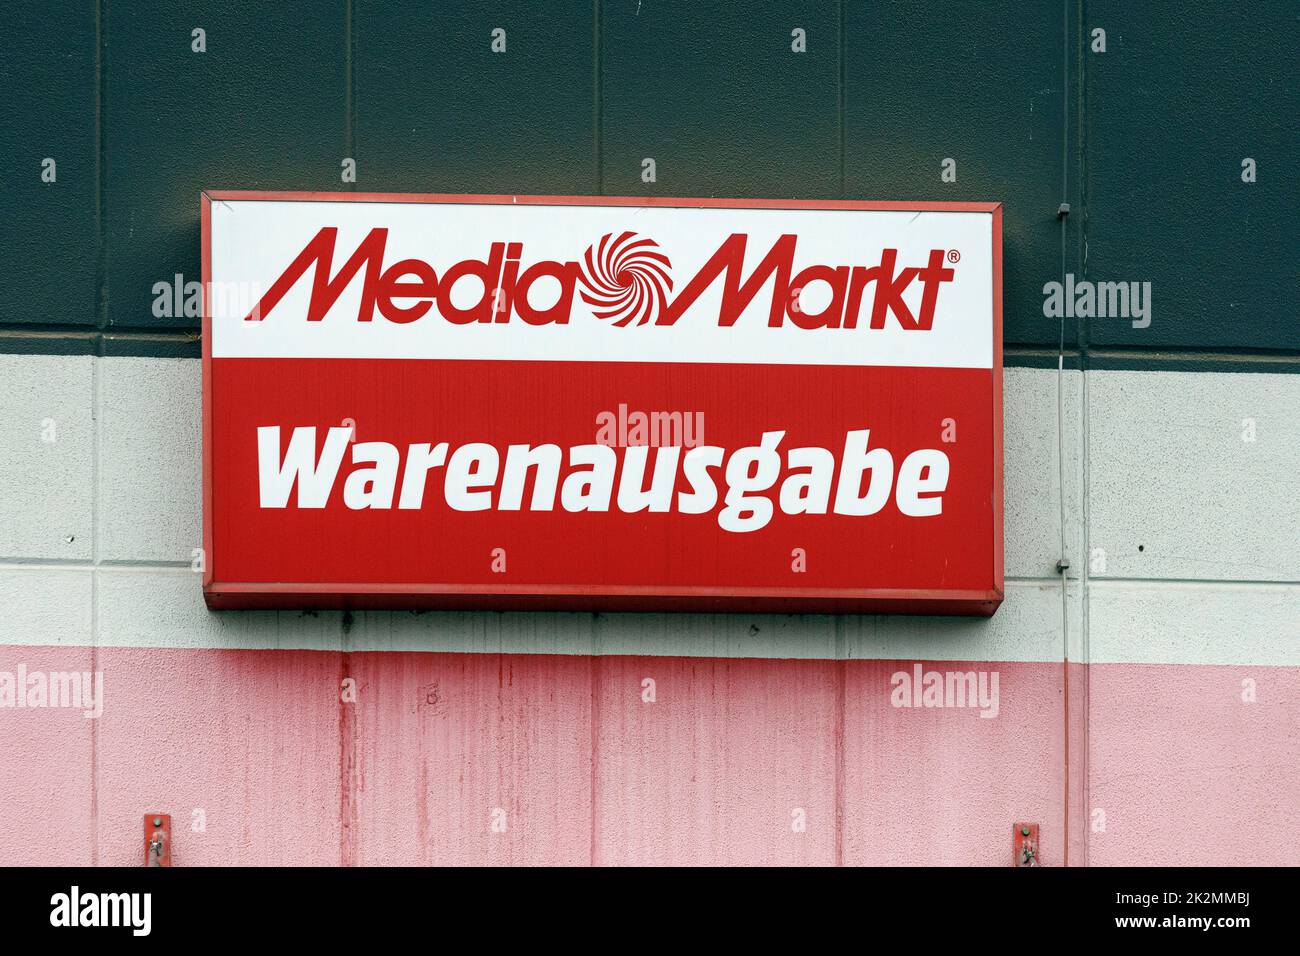 Mediamarkt Warenausgabe Stock Photo